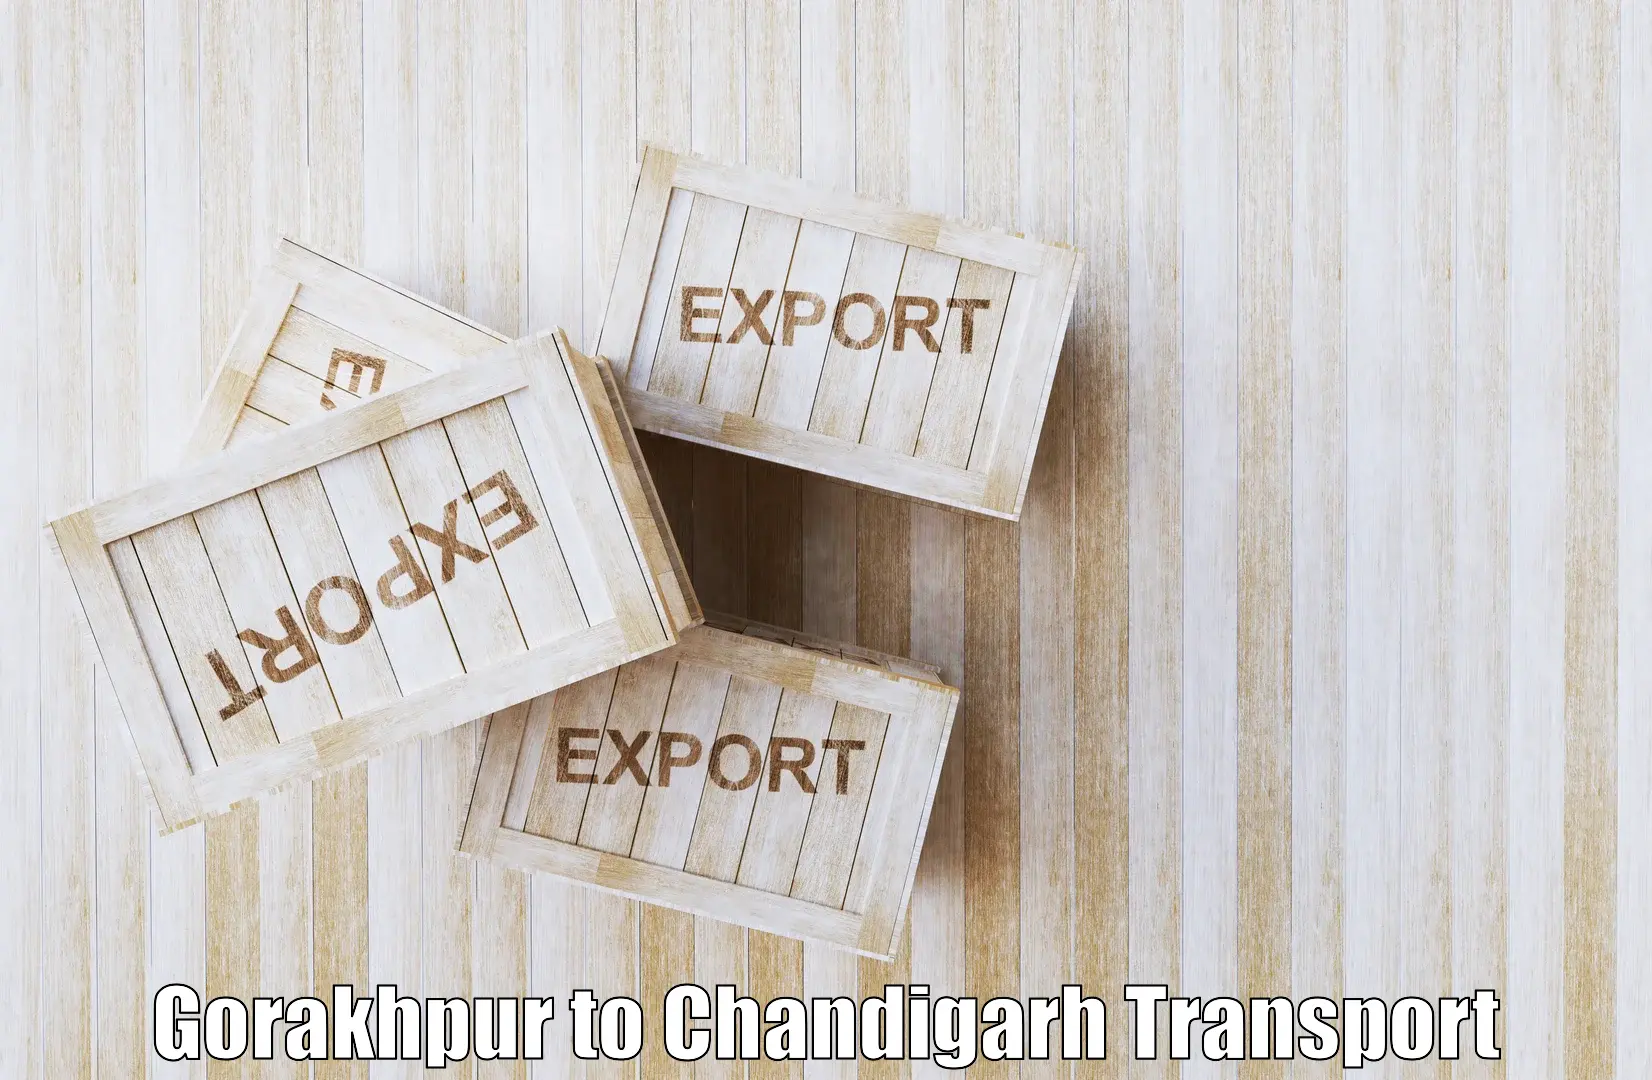 Delivery service Gorakhpur to Chandigarh